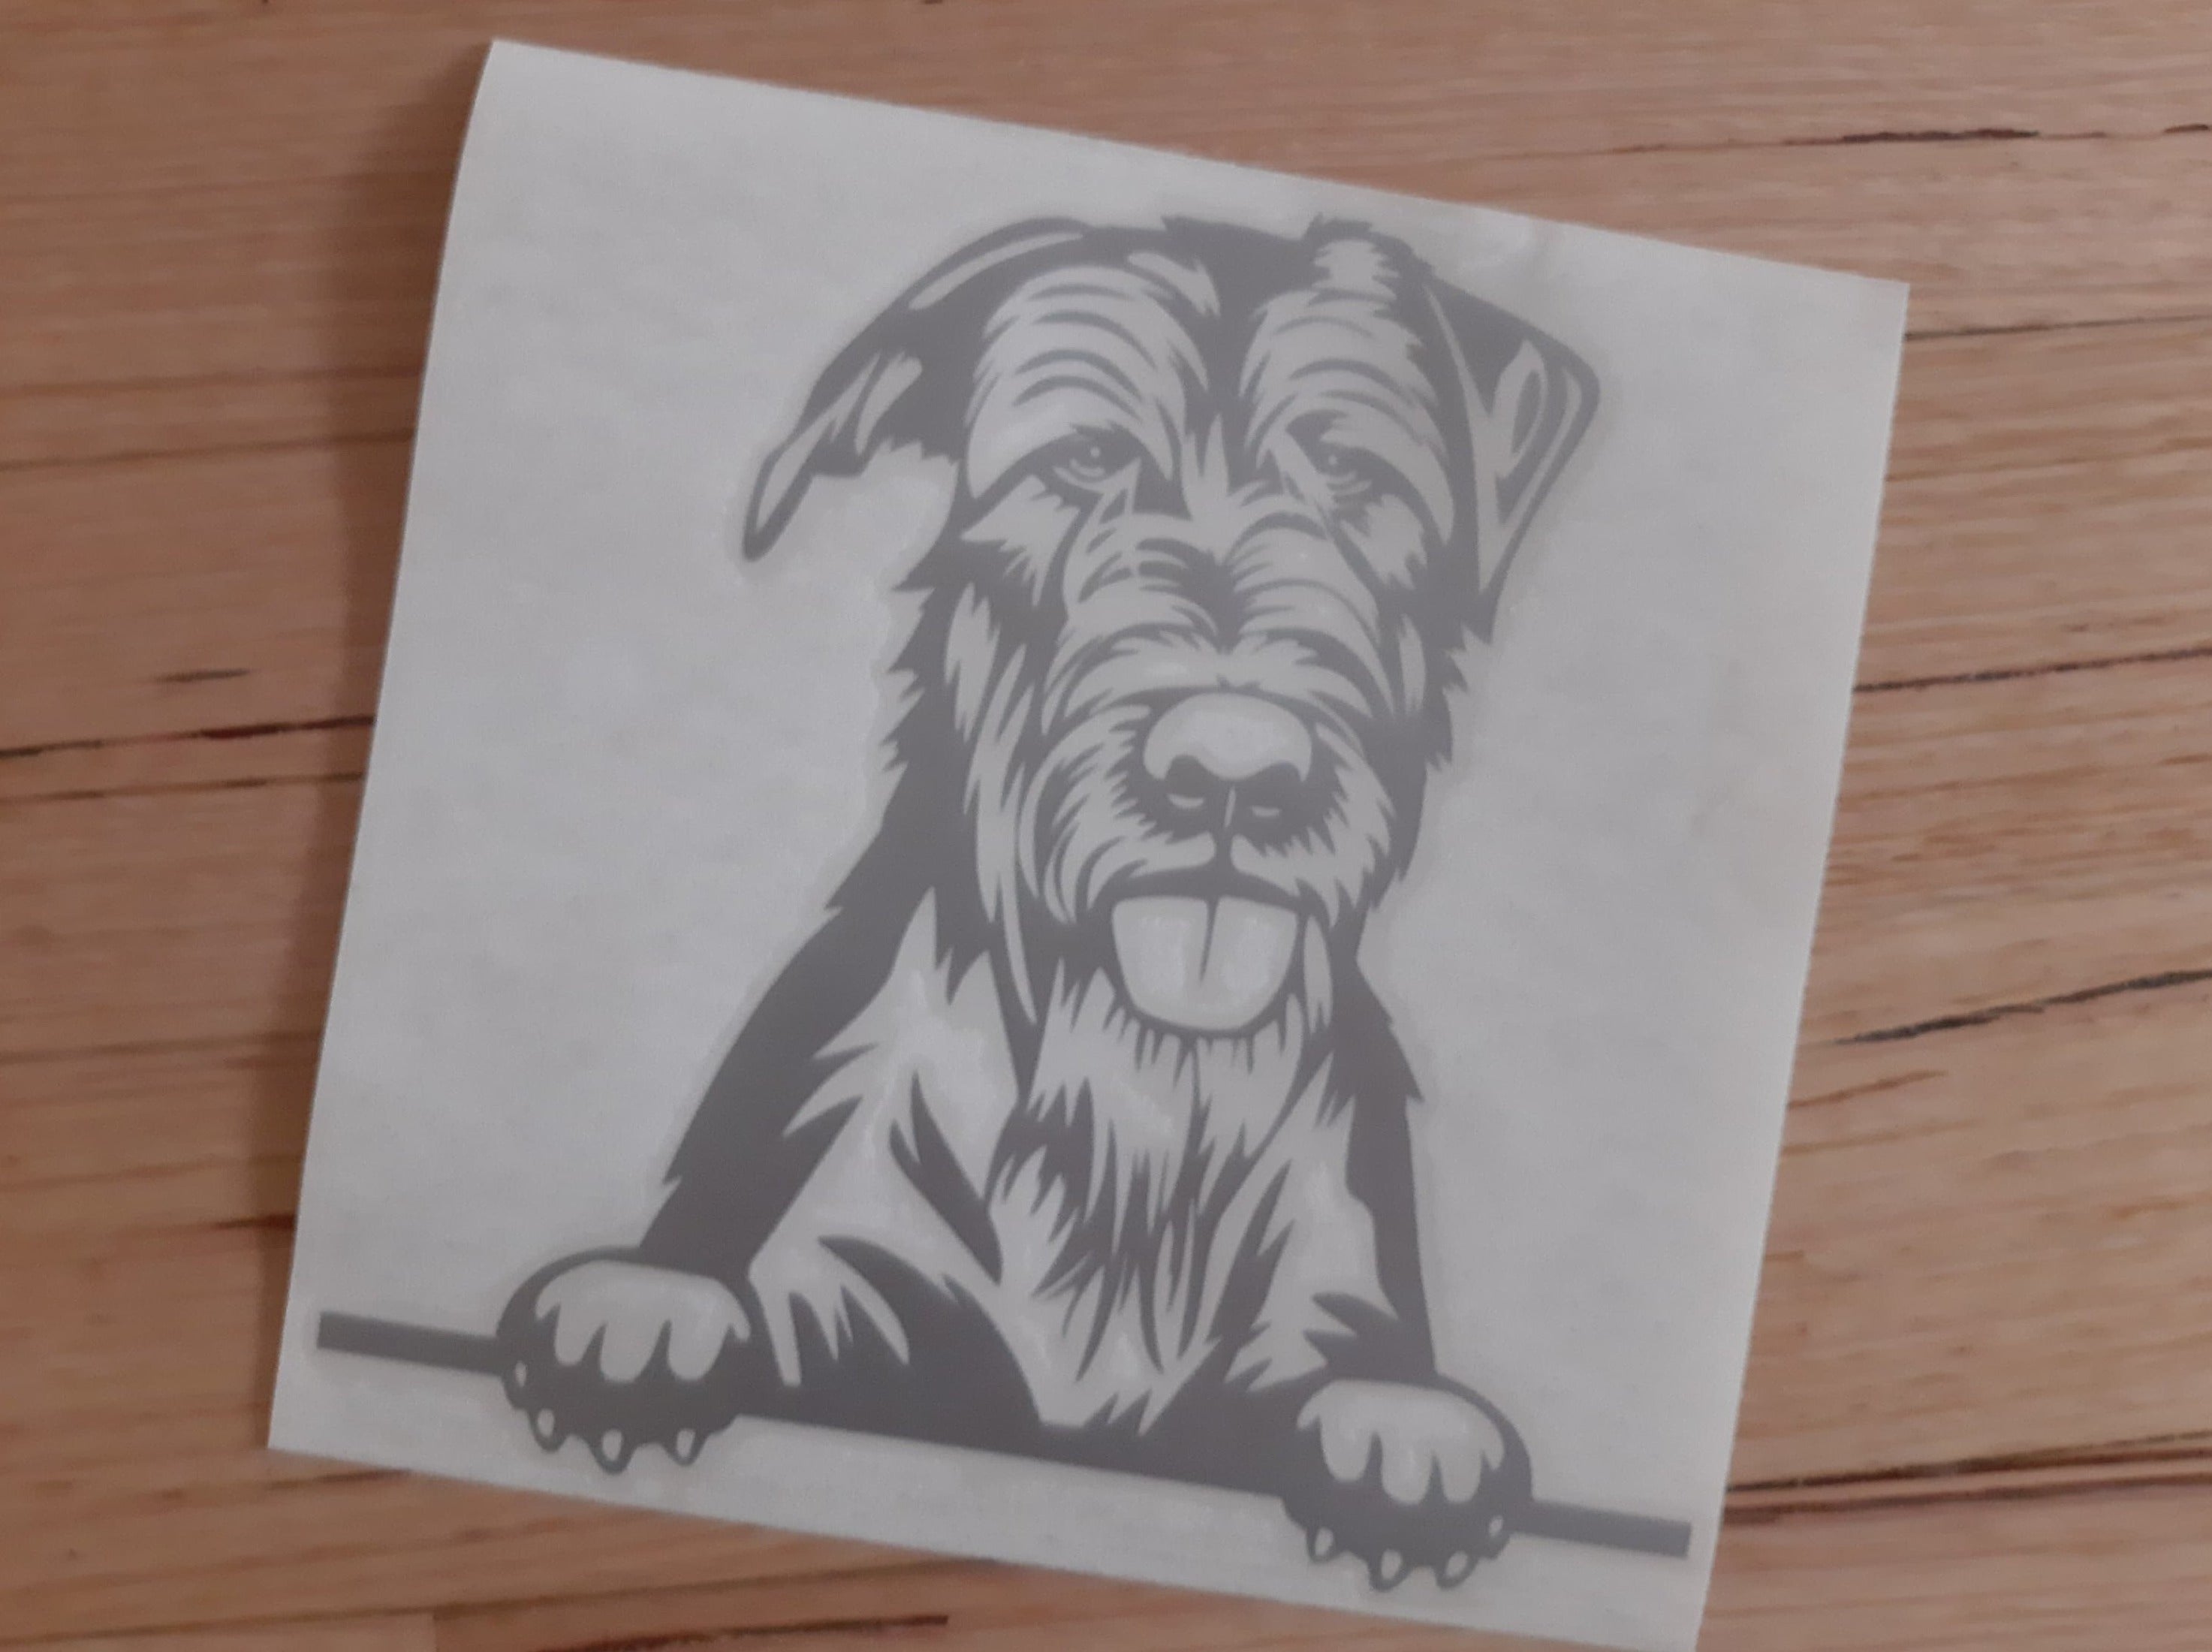 Peeking Irish Wolfhound Car Sticker - My Crafty Dog